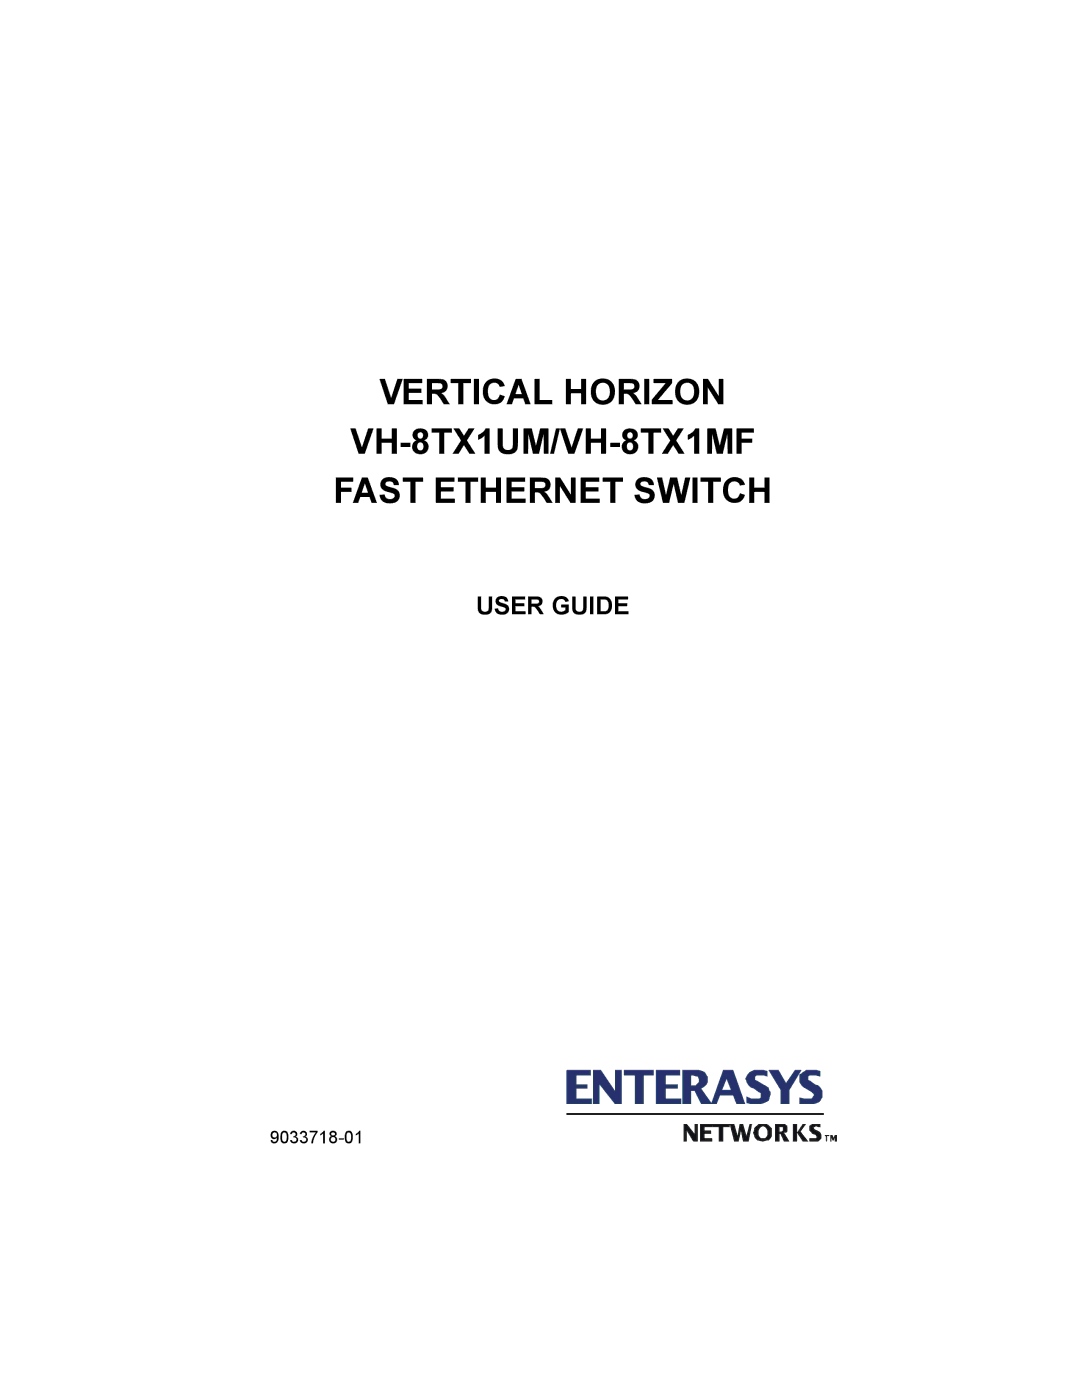 Enterasys Networks manual Vertical Horizon VH-8TX1UM/VH-8TX1MF Fast Ethernet Switch, User Guide 